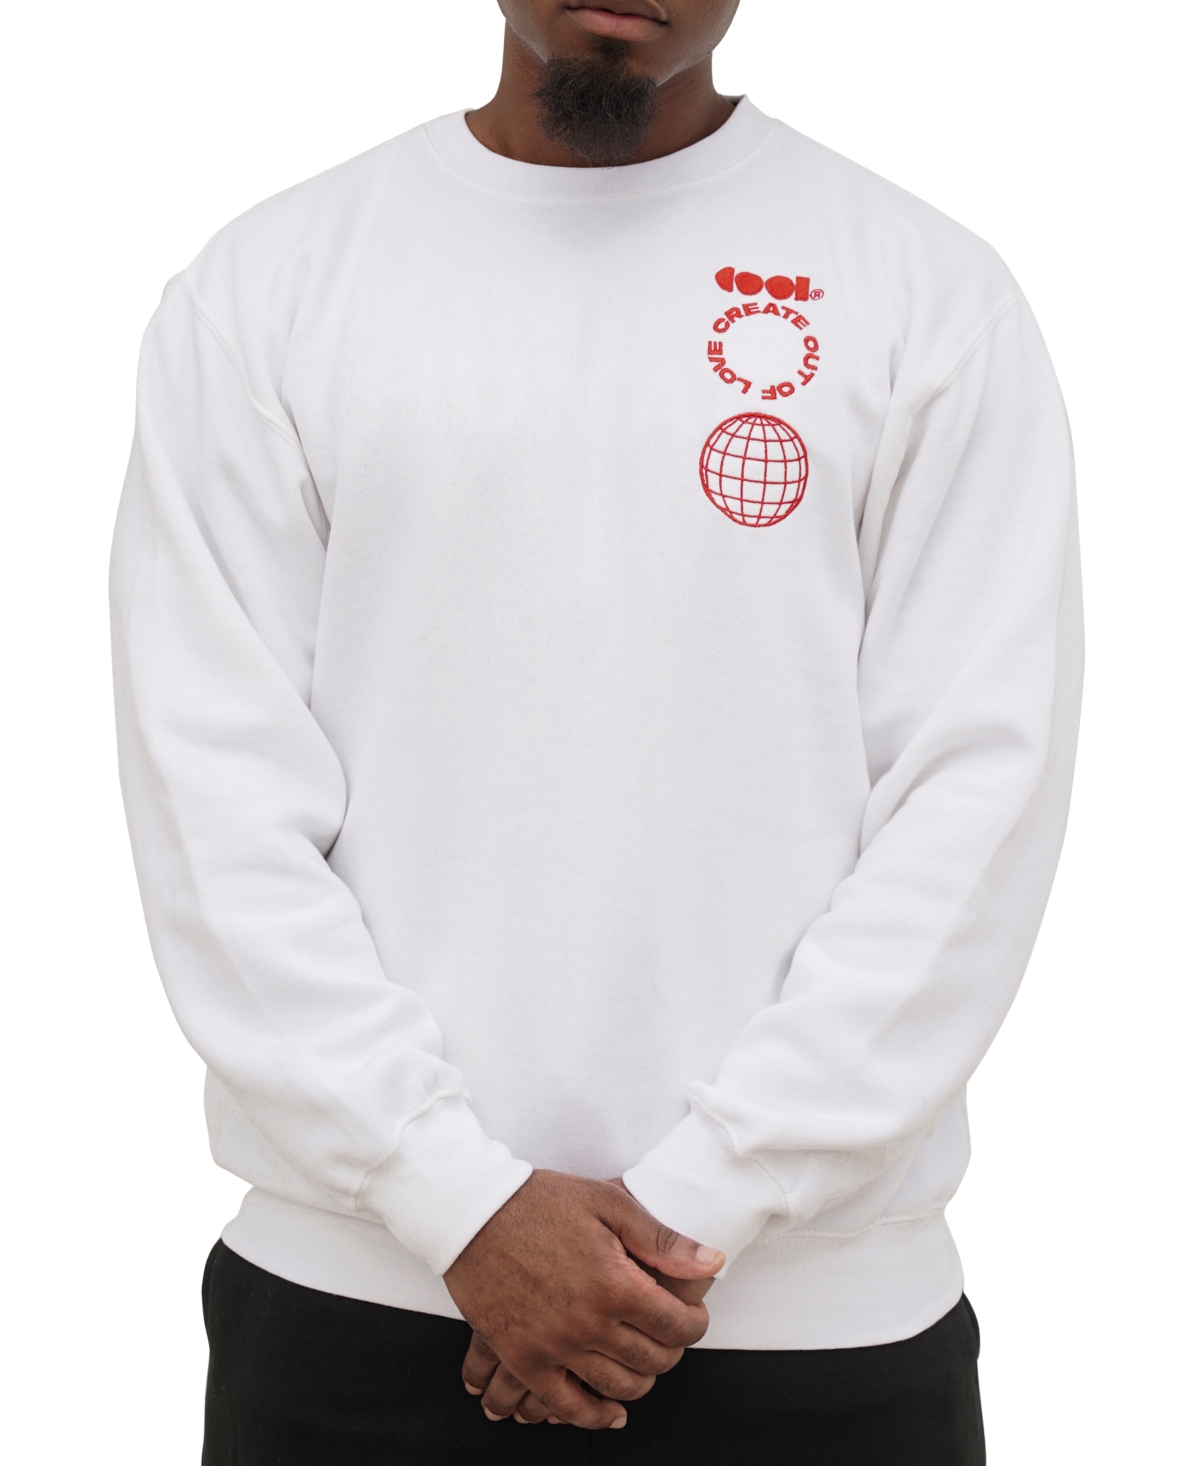 Cool Creative Men's Cool World Embroidered Printed Sweatshirt